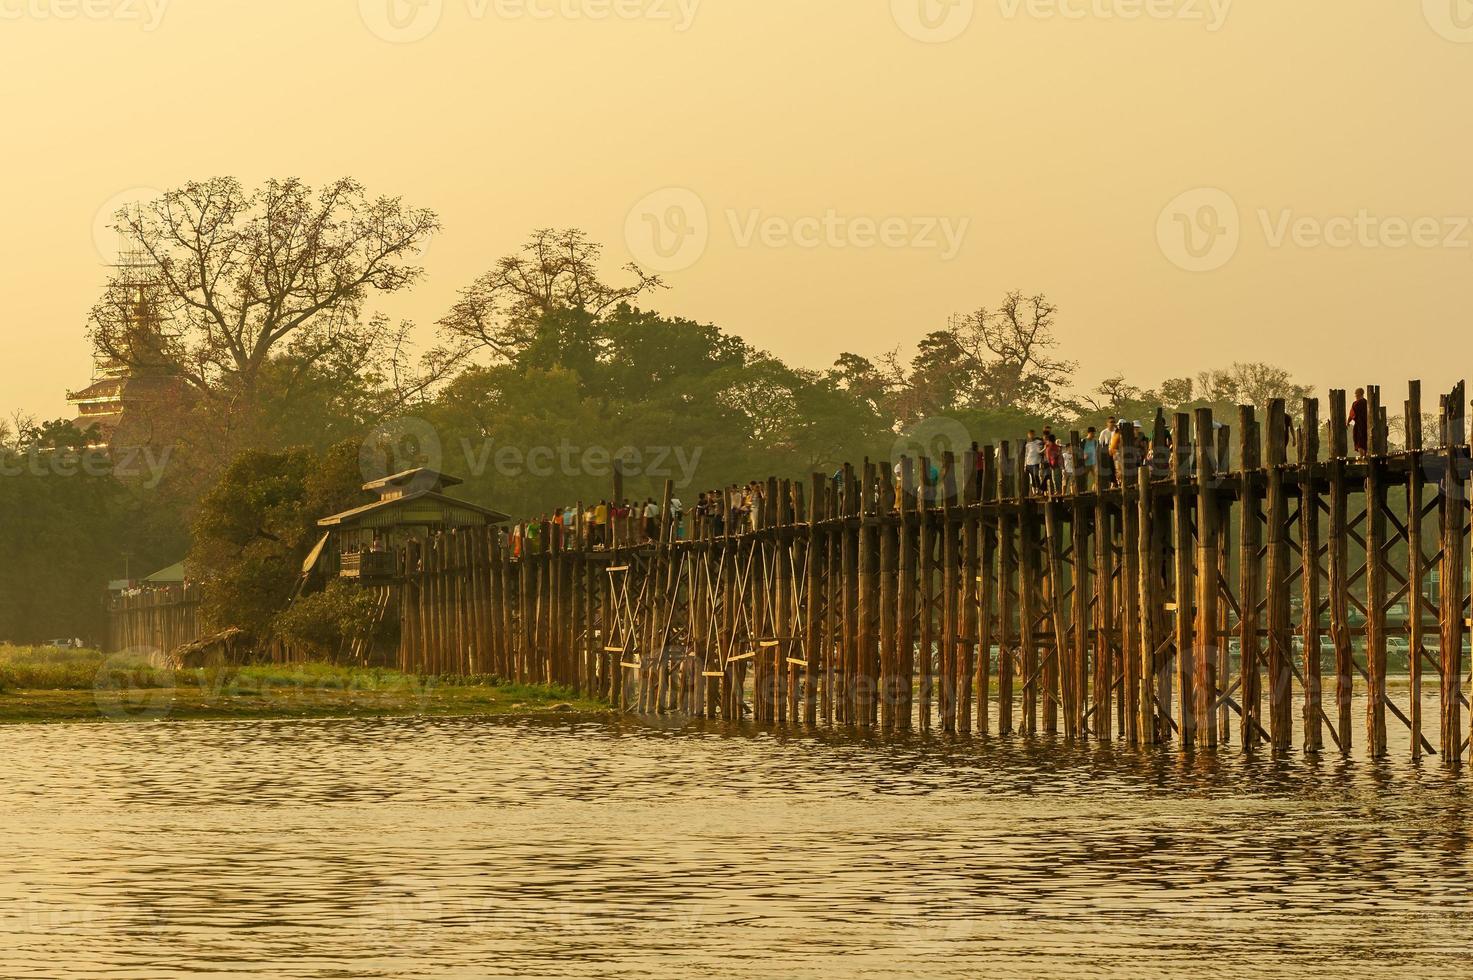 Sunset with u bein bridge in Myanmar Burma photo